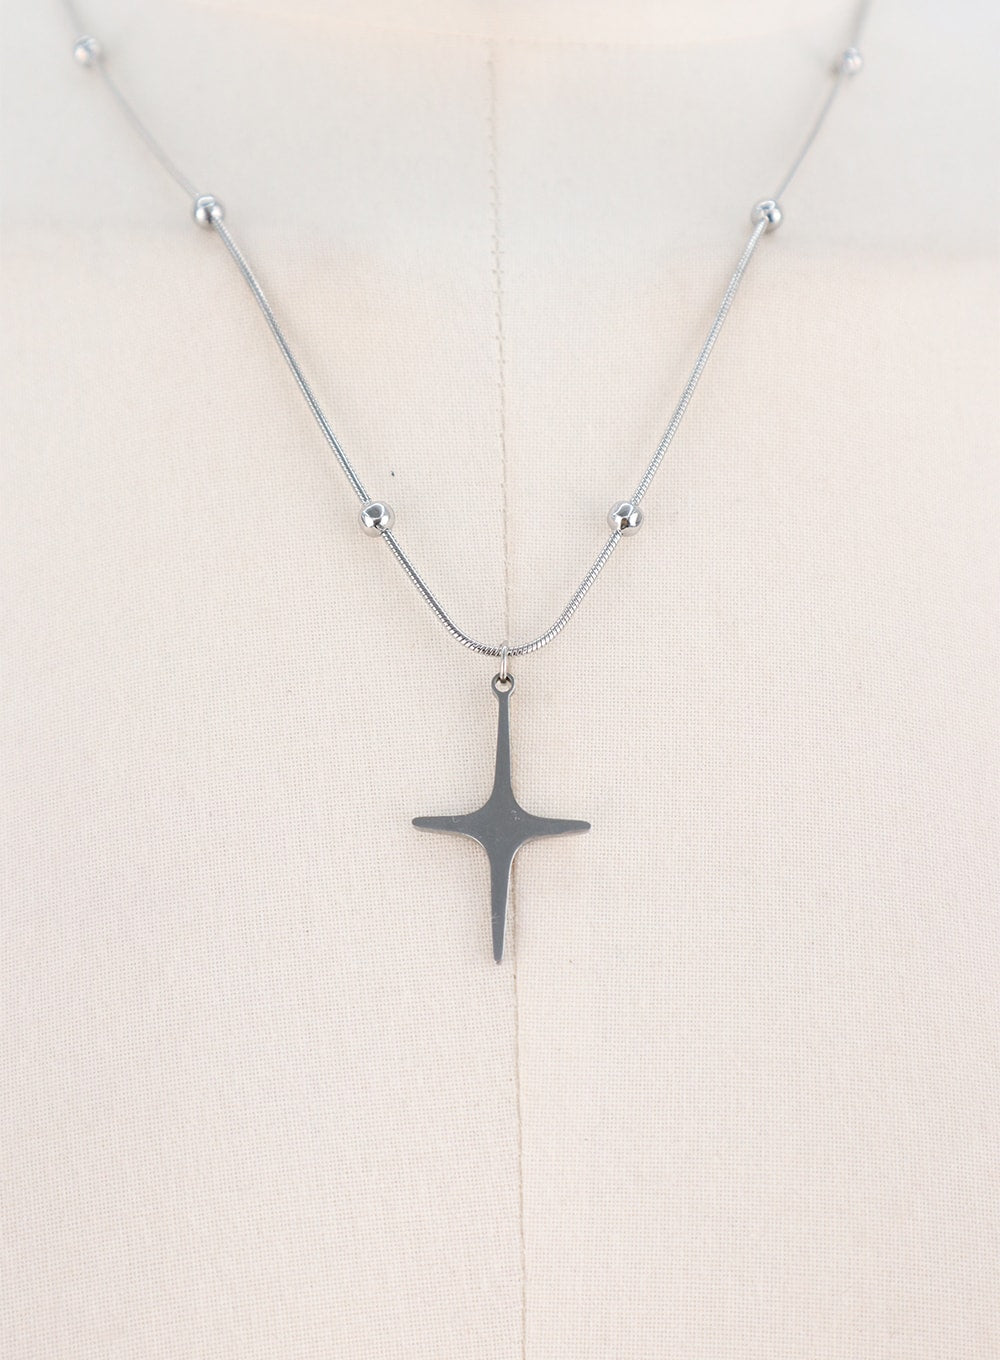 star-pendant-necklace-co310